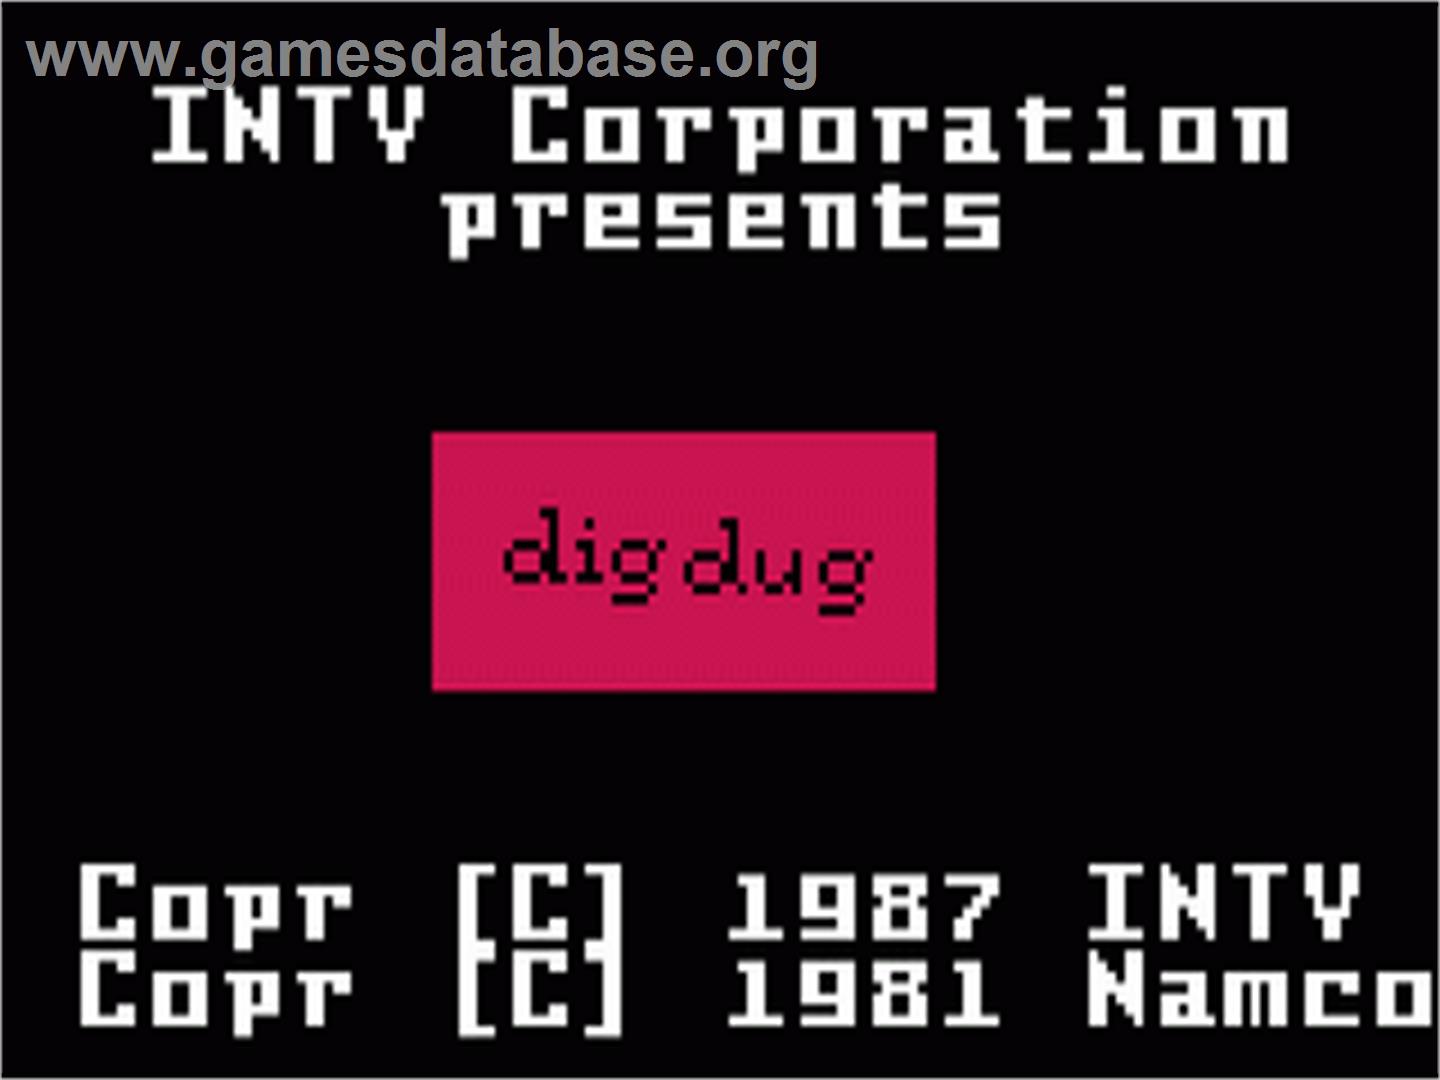 Dig Dug - Mattel Intellivision - Artwork - Title Screen